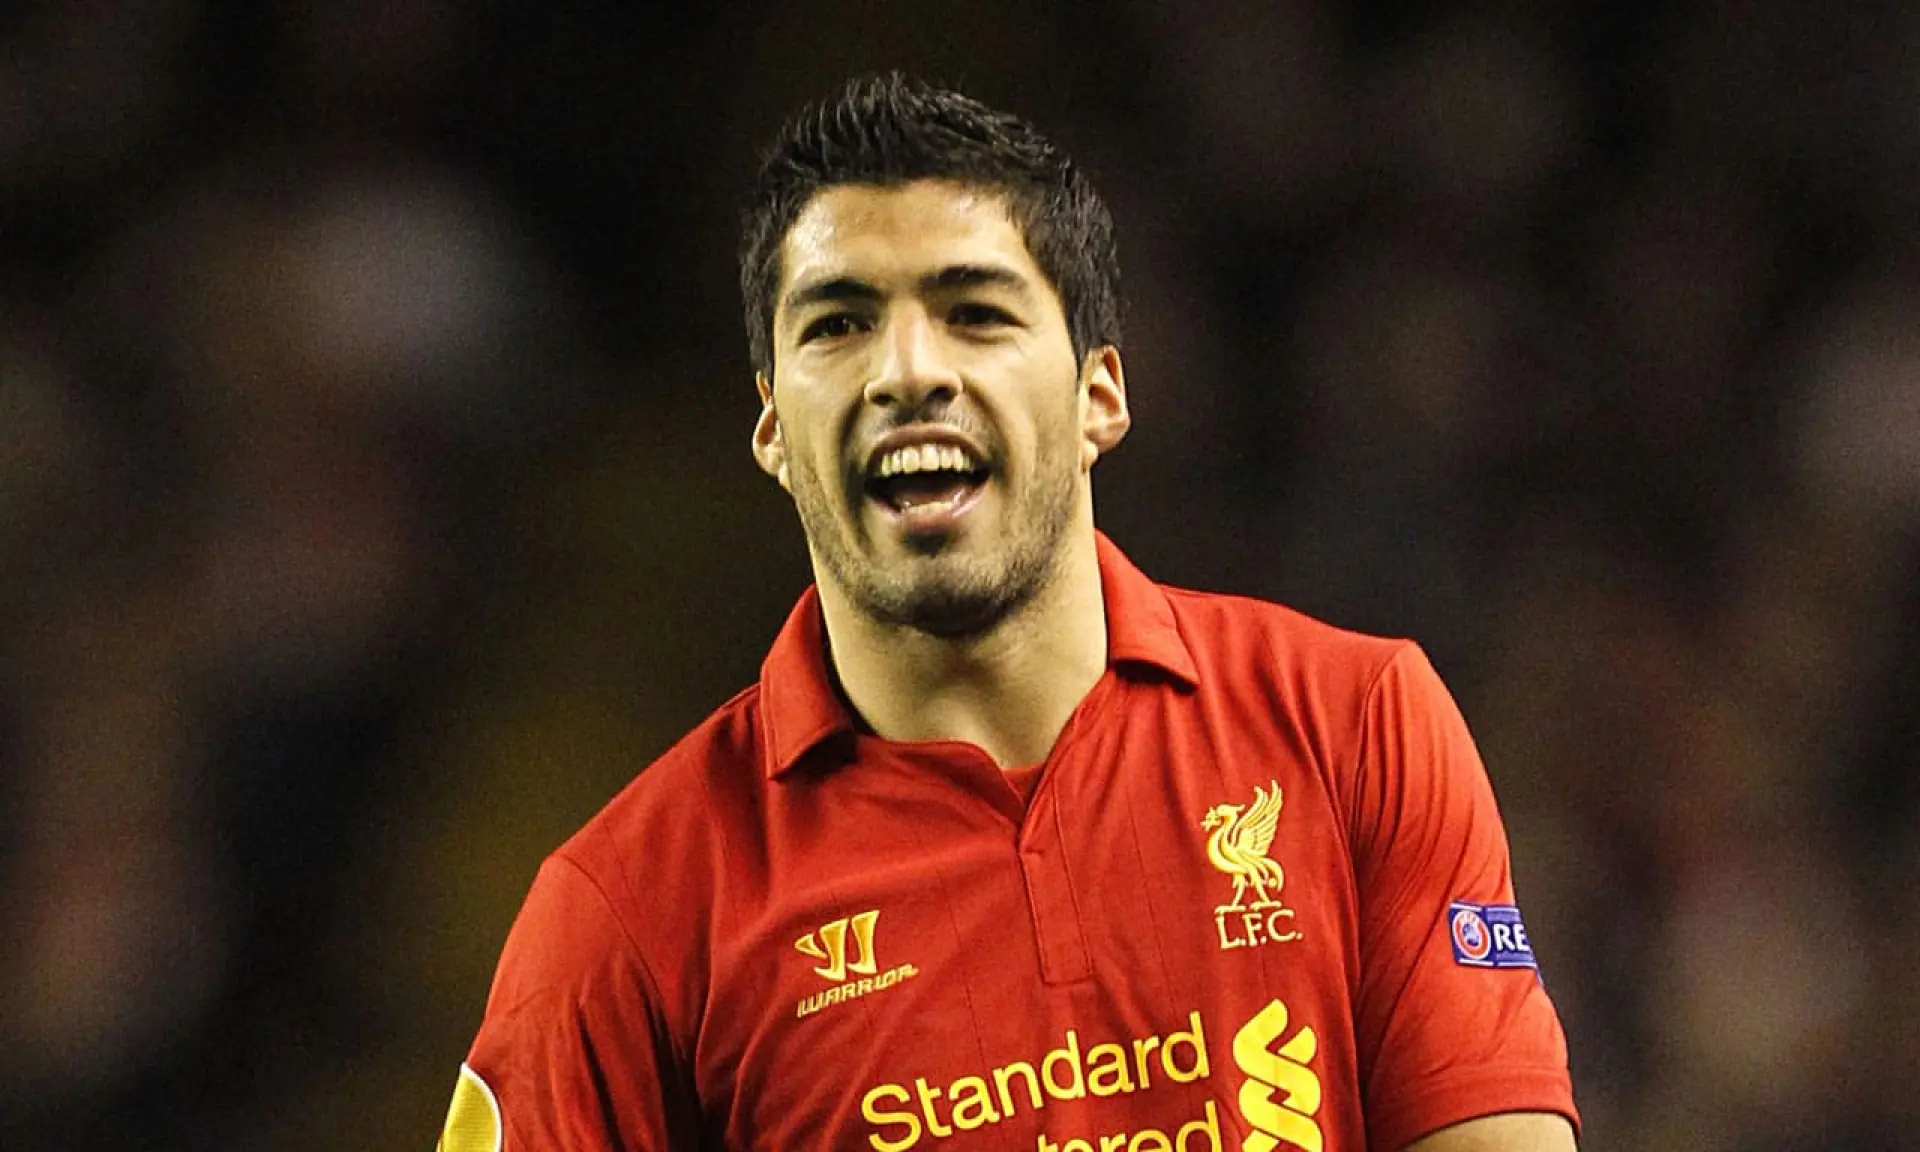 Luis Suarez, Liverpool